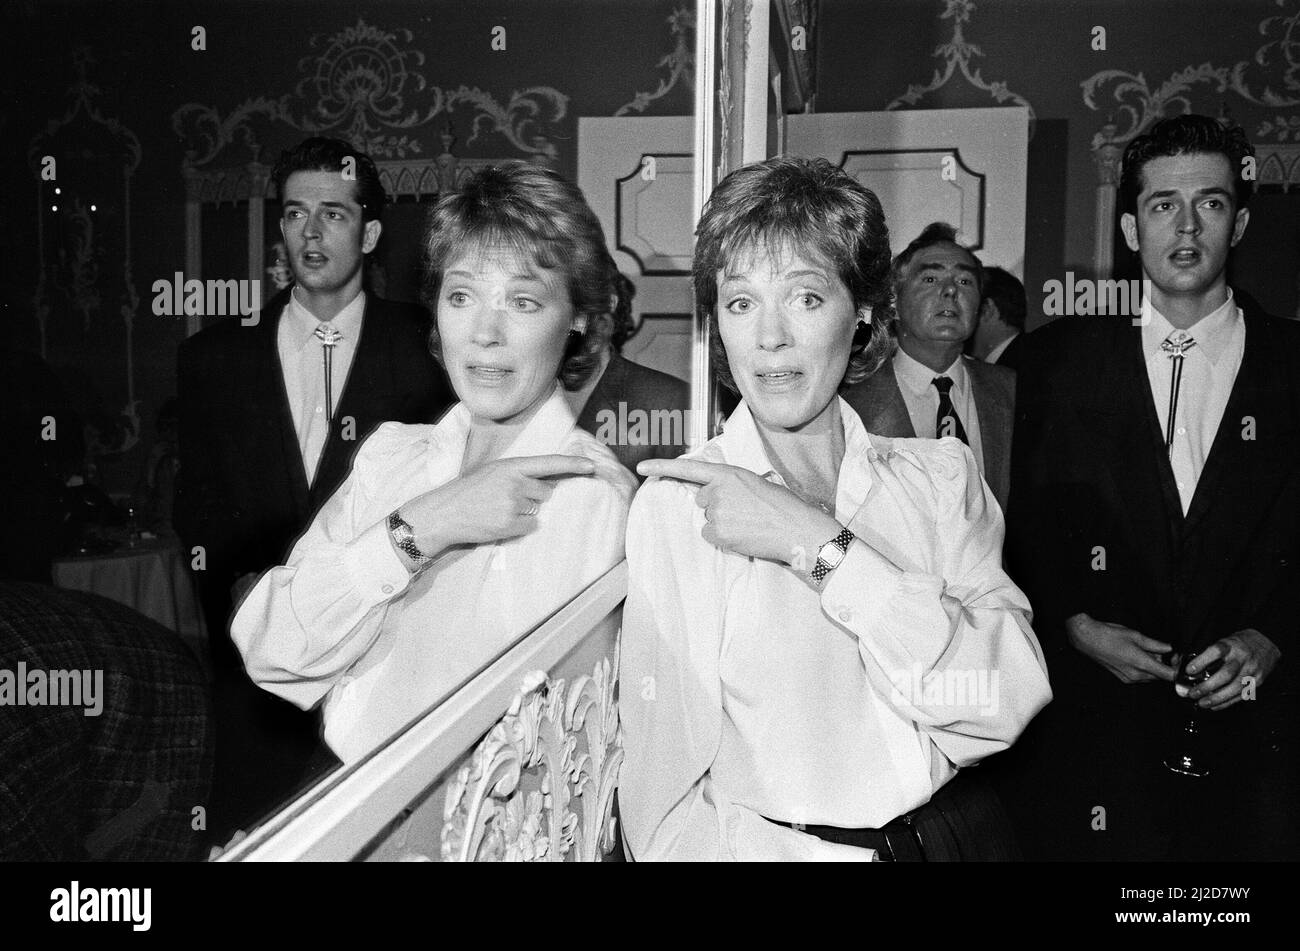 Julie Andrews e Rupert Everett, protagonista del nuovo film "Duet for One". 9th febbraio 1986. Foto Stock